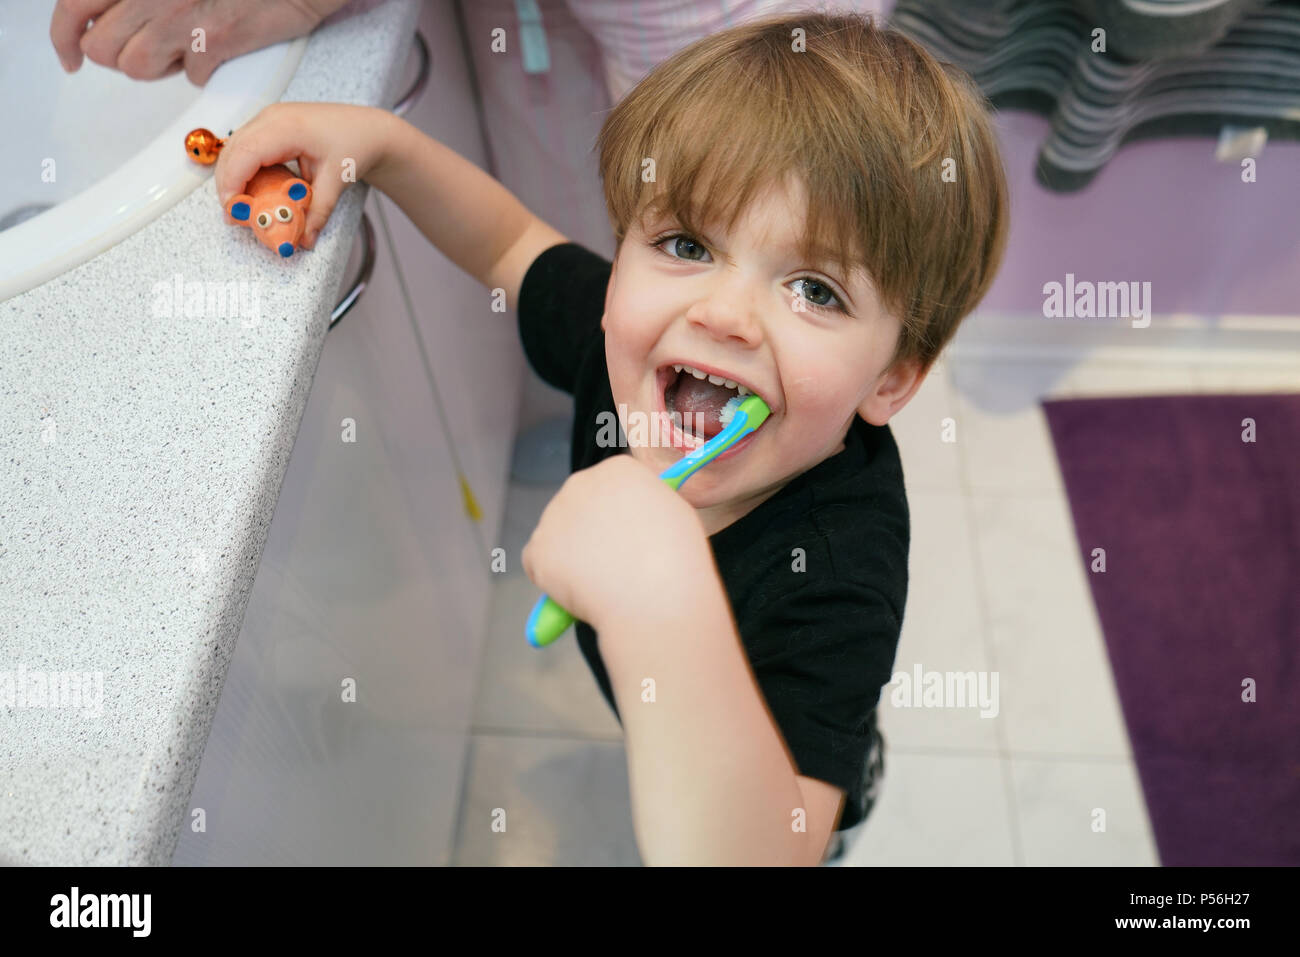 Montreal, Canada, June 24, 2018. Young 3 year-old boy brushing his teeth.Credit:Mario Beauregard/Alamy Live News Stock Photo